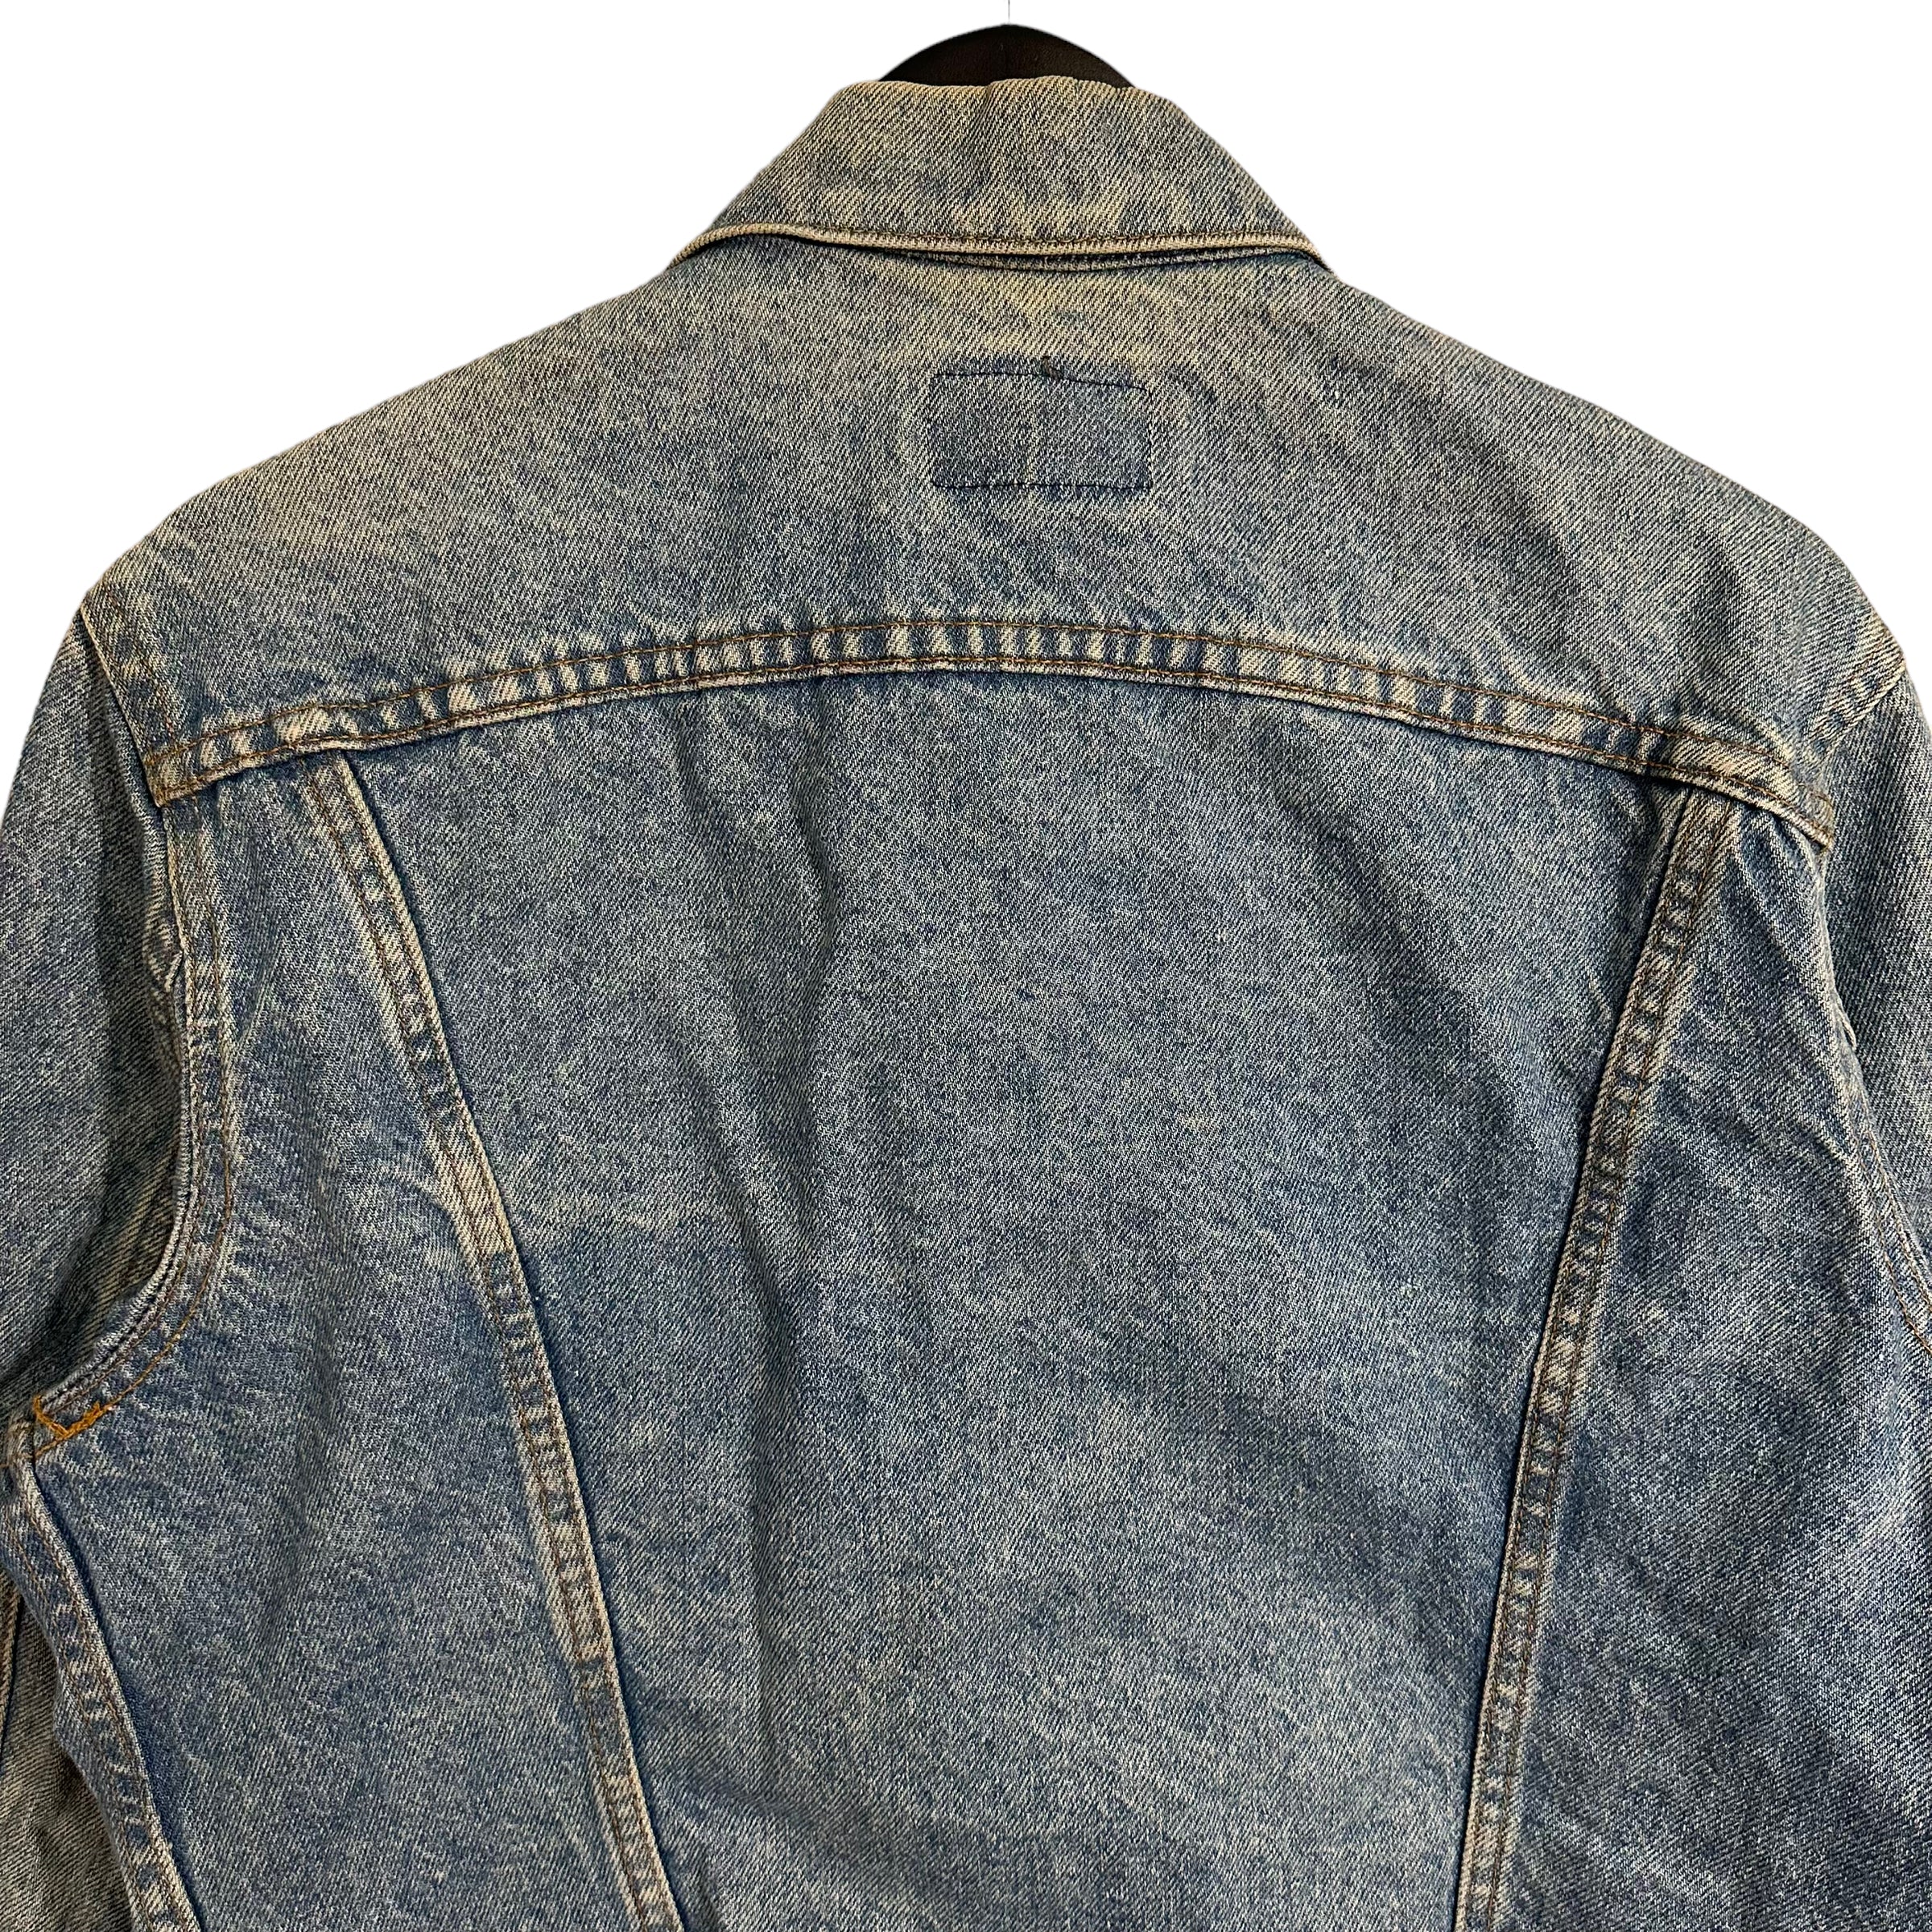 Vintage Levi's Denim Jacket 90s